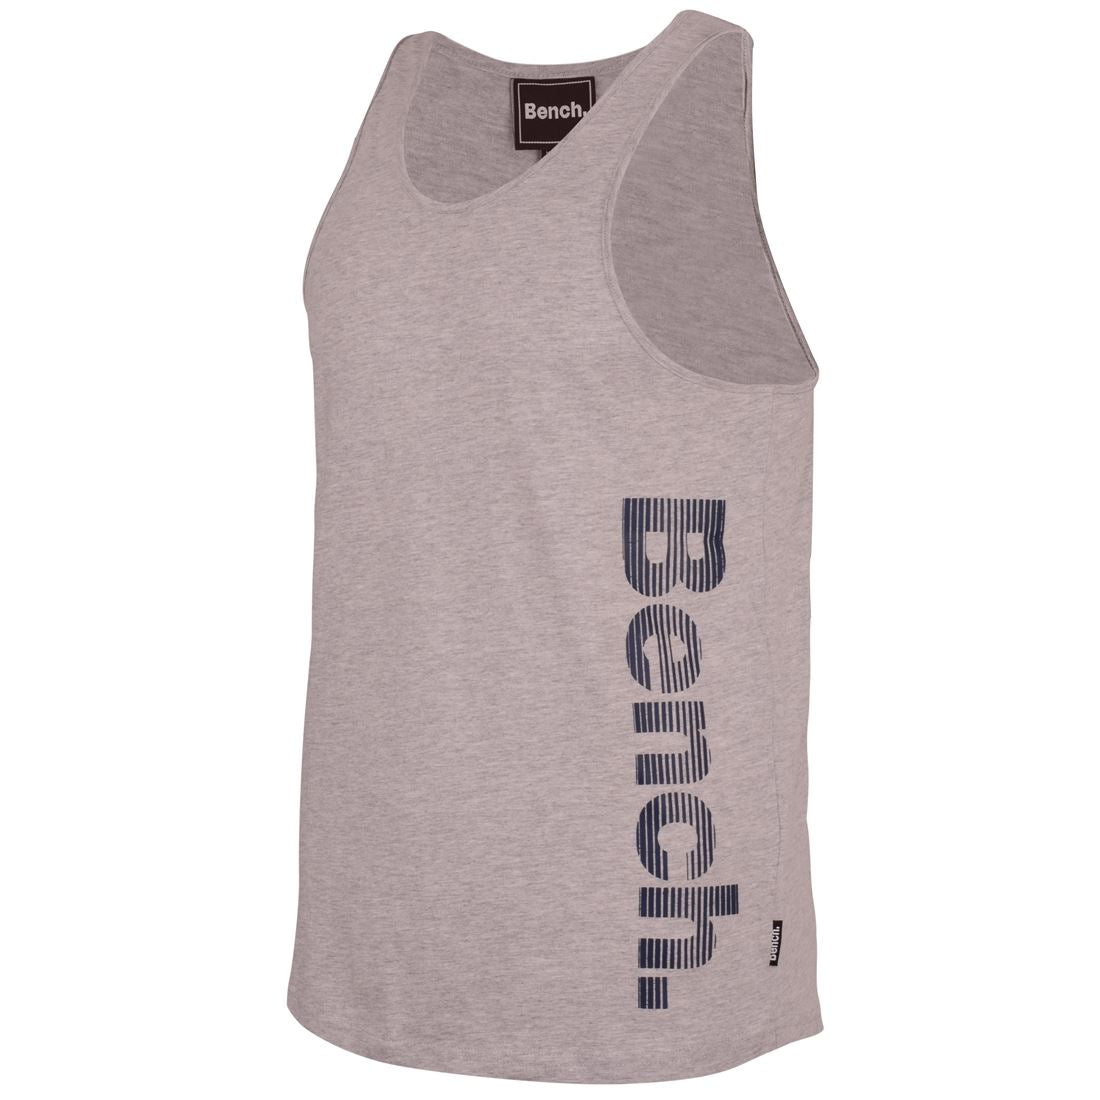 Men's Bench Vest Sleeveless T Shirt Tank Top Cotton Taring Holiday Vests